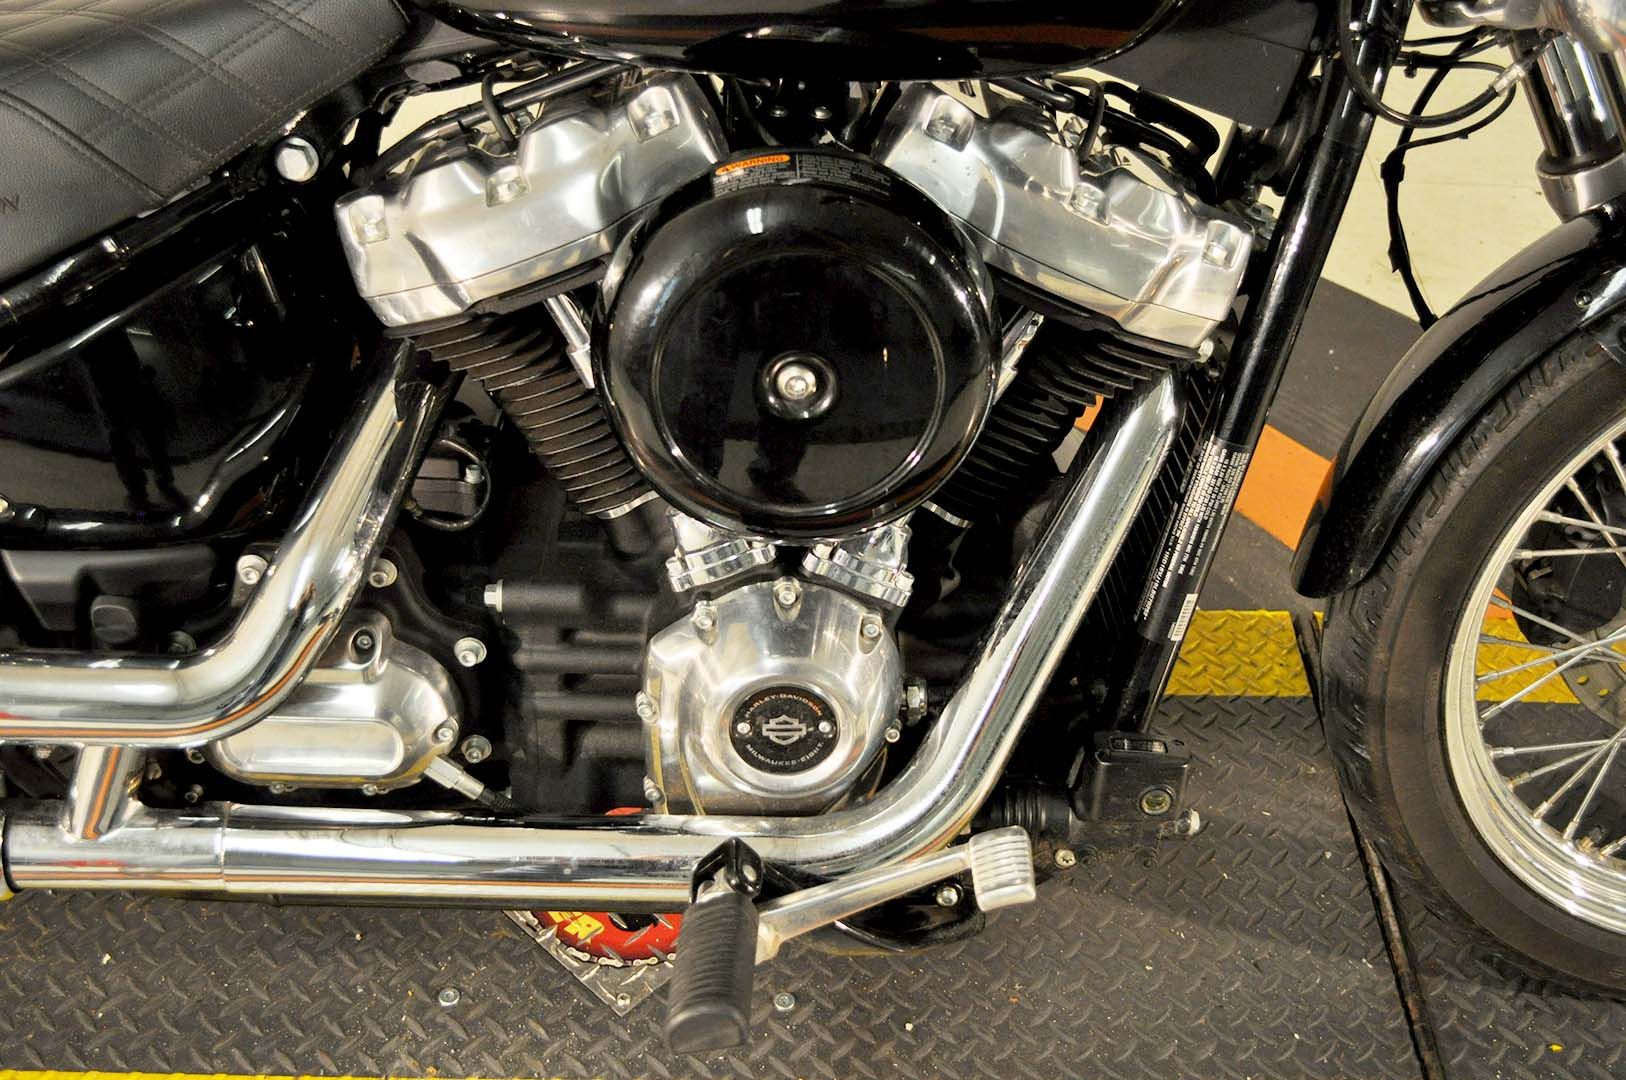 2020 Harley-Davidson Softail® Standard in Winston Salem, North Carolina - Photo 14